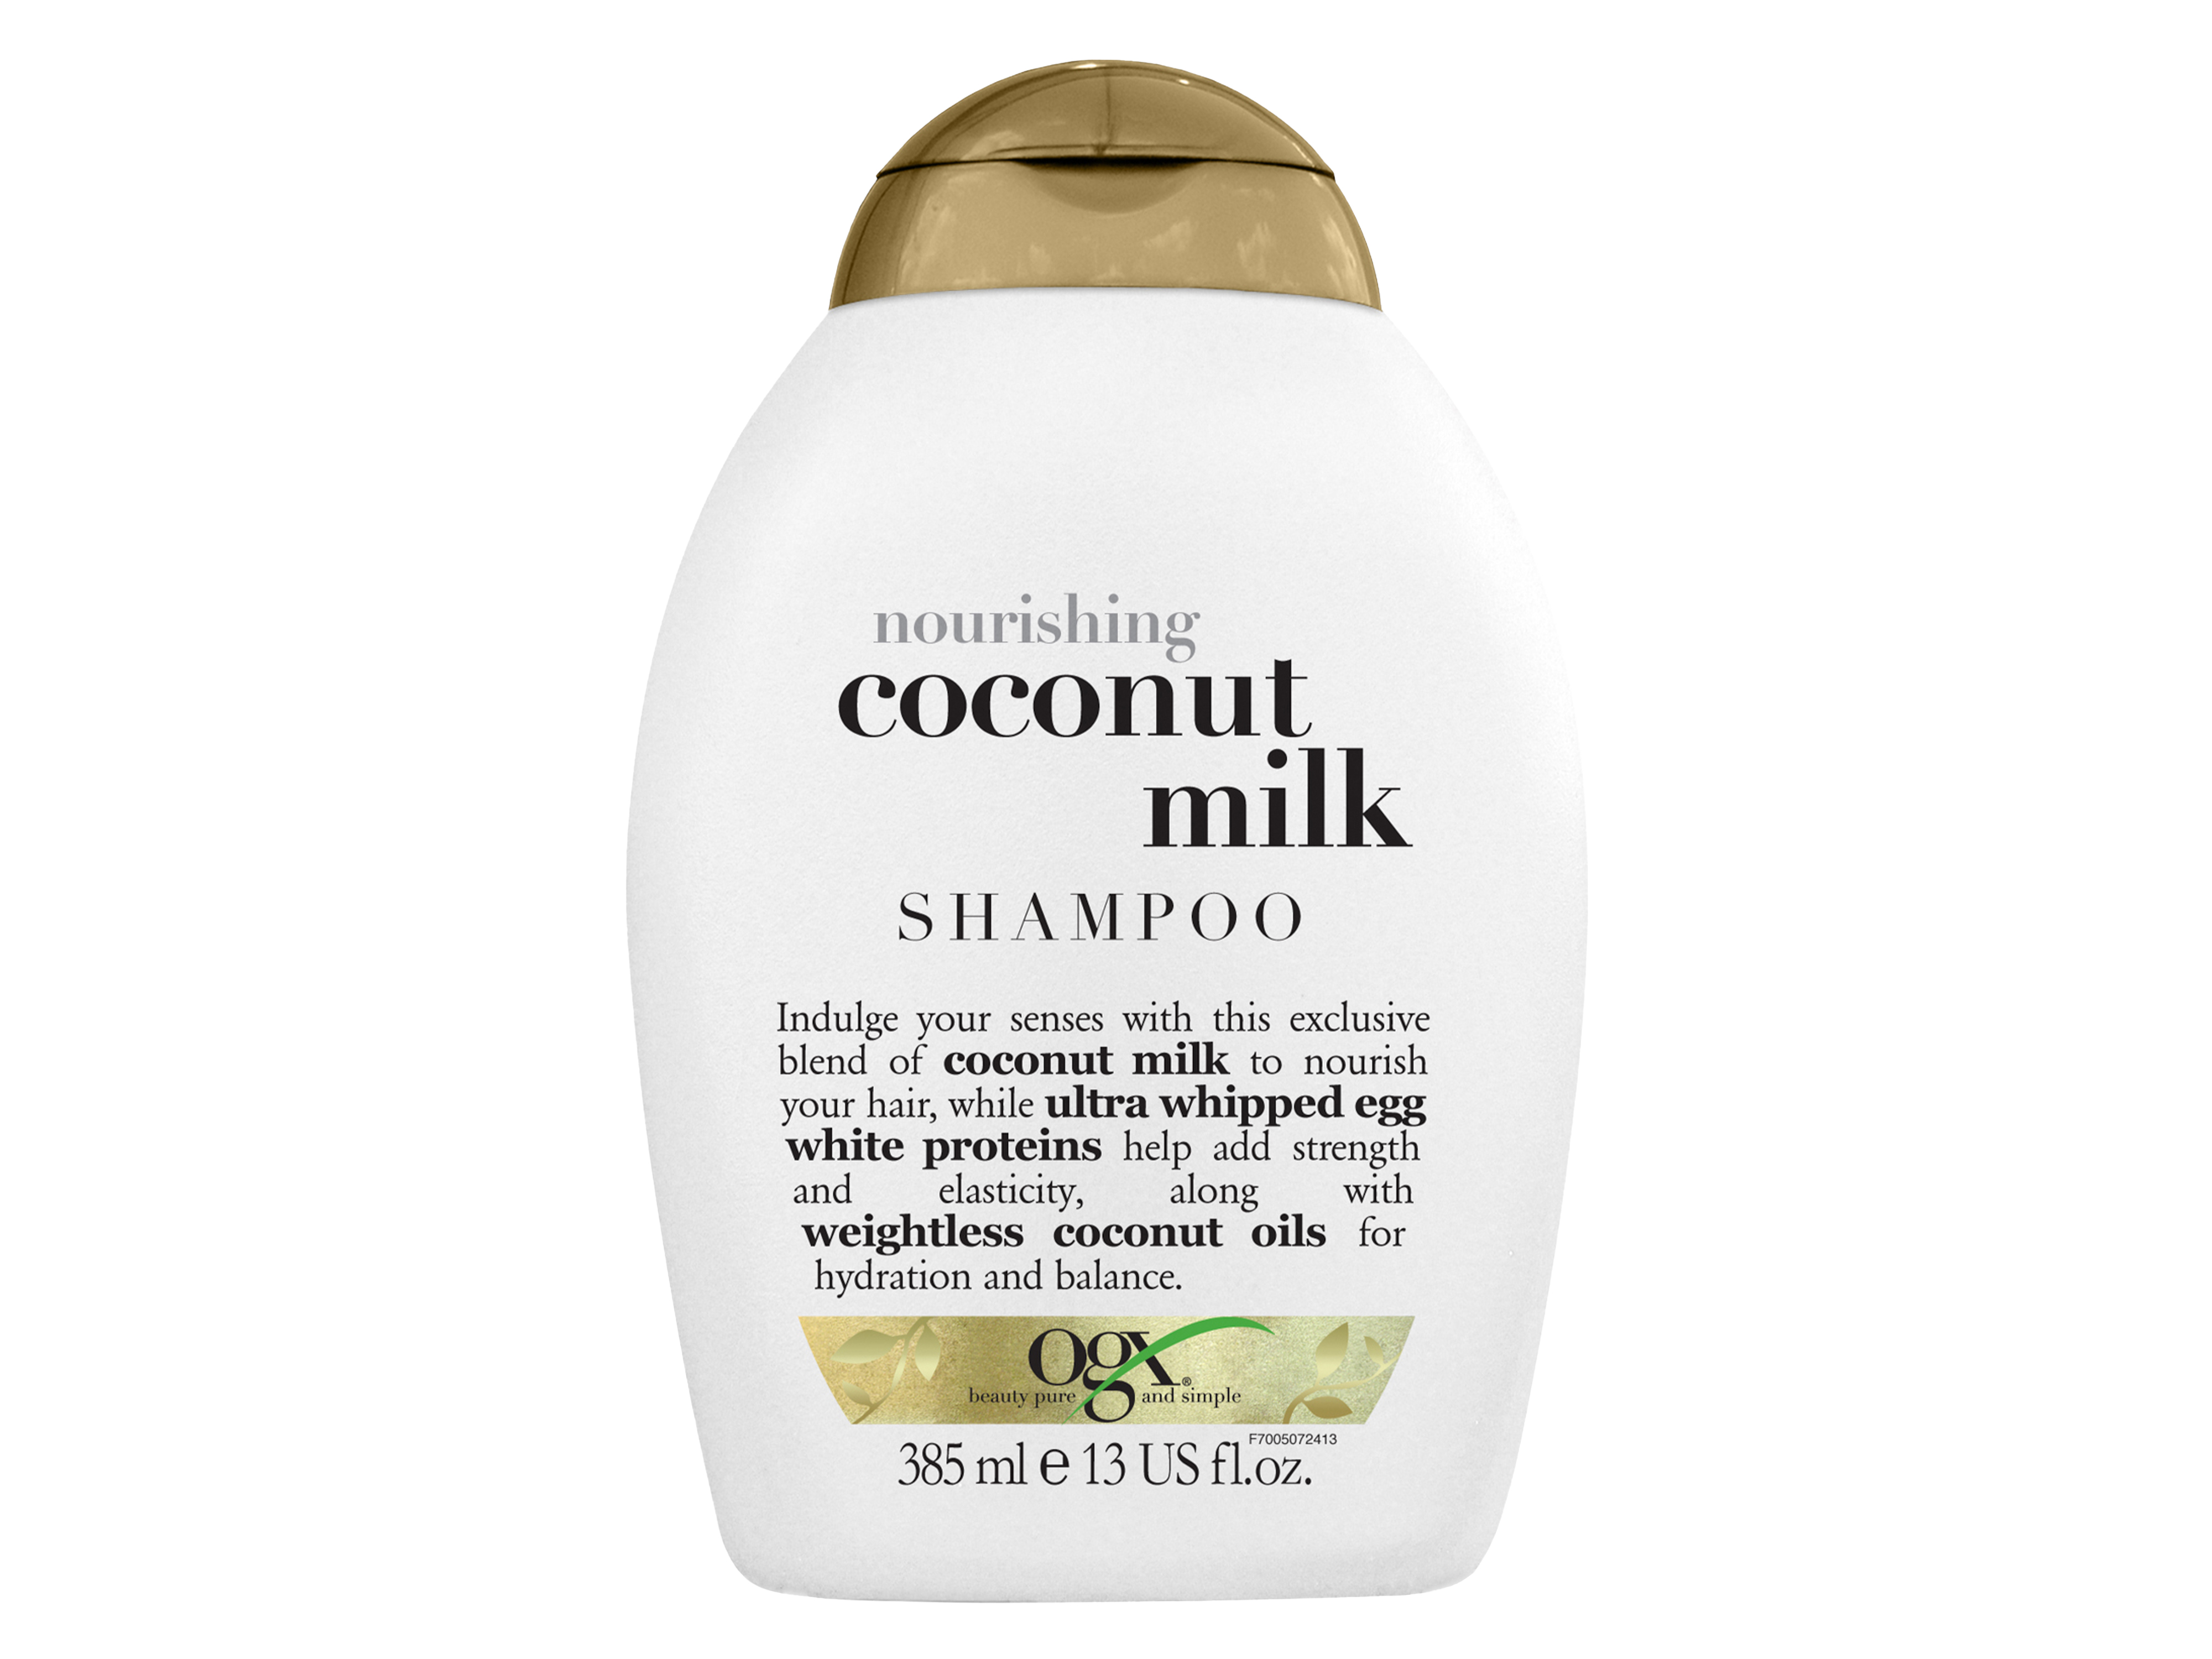 Ogx Coconut Milk Shampoo, 385 ml